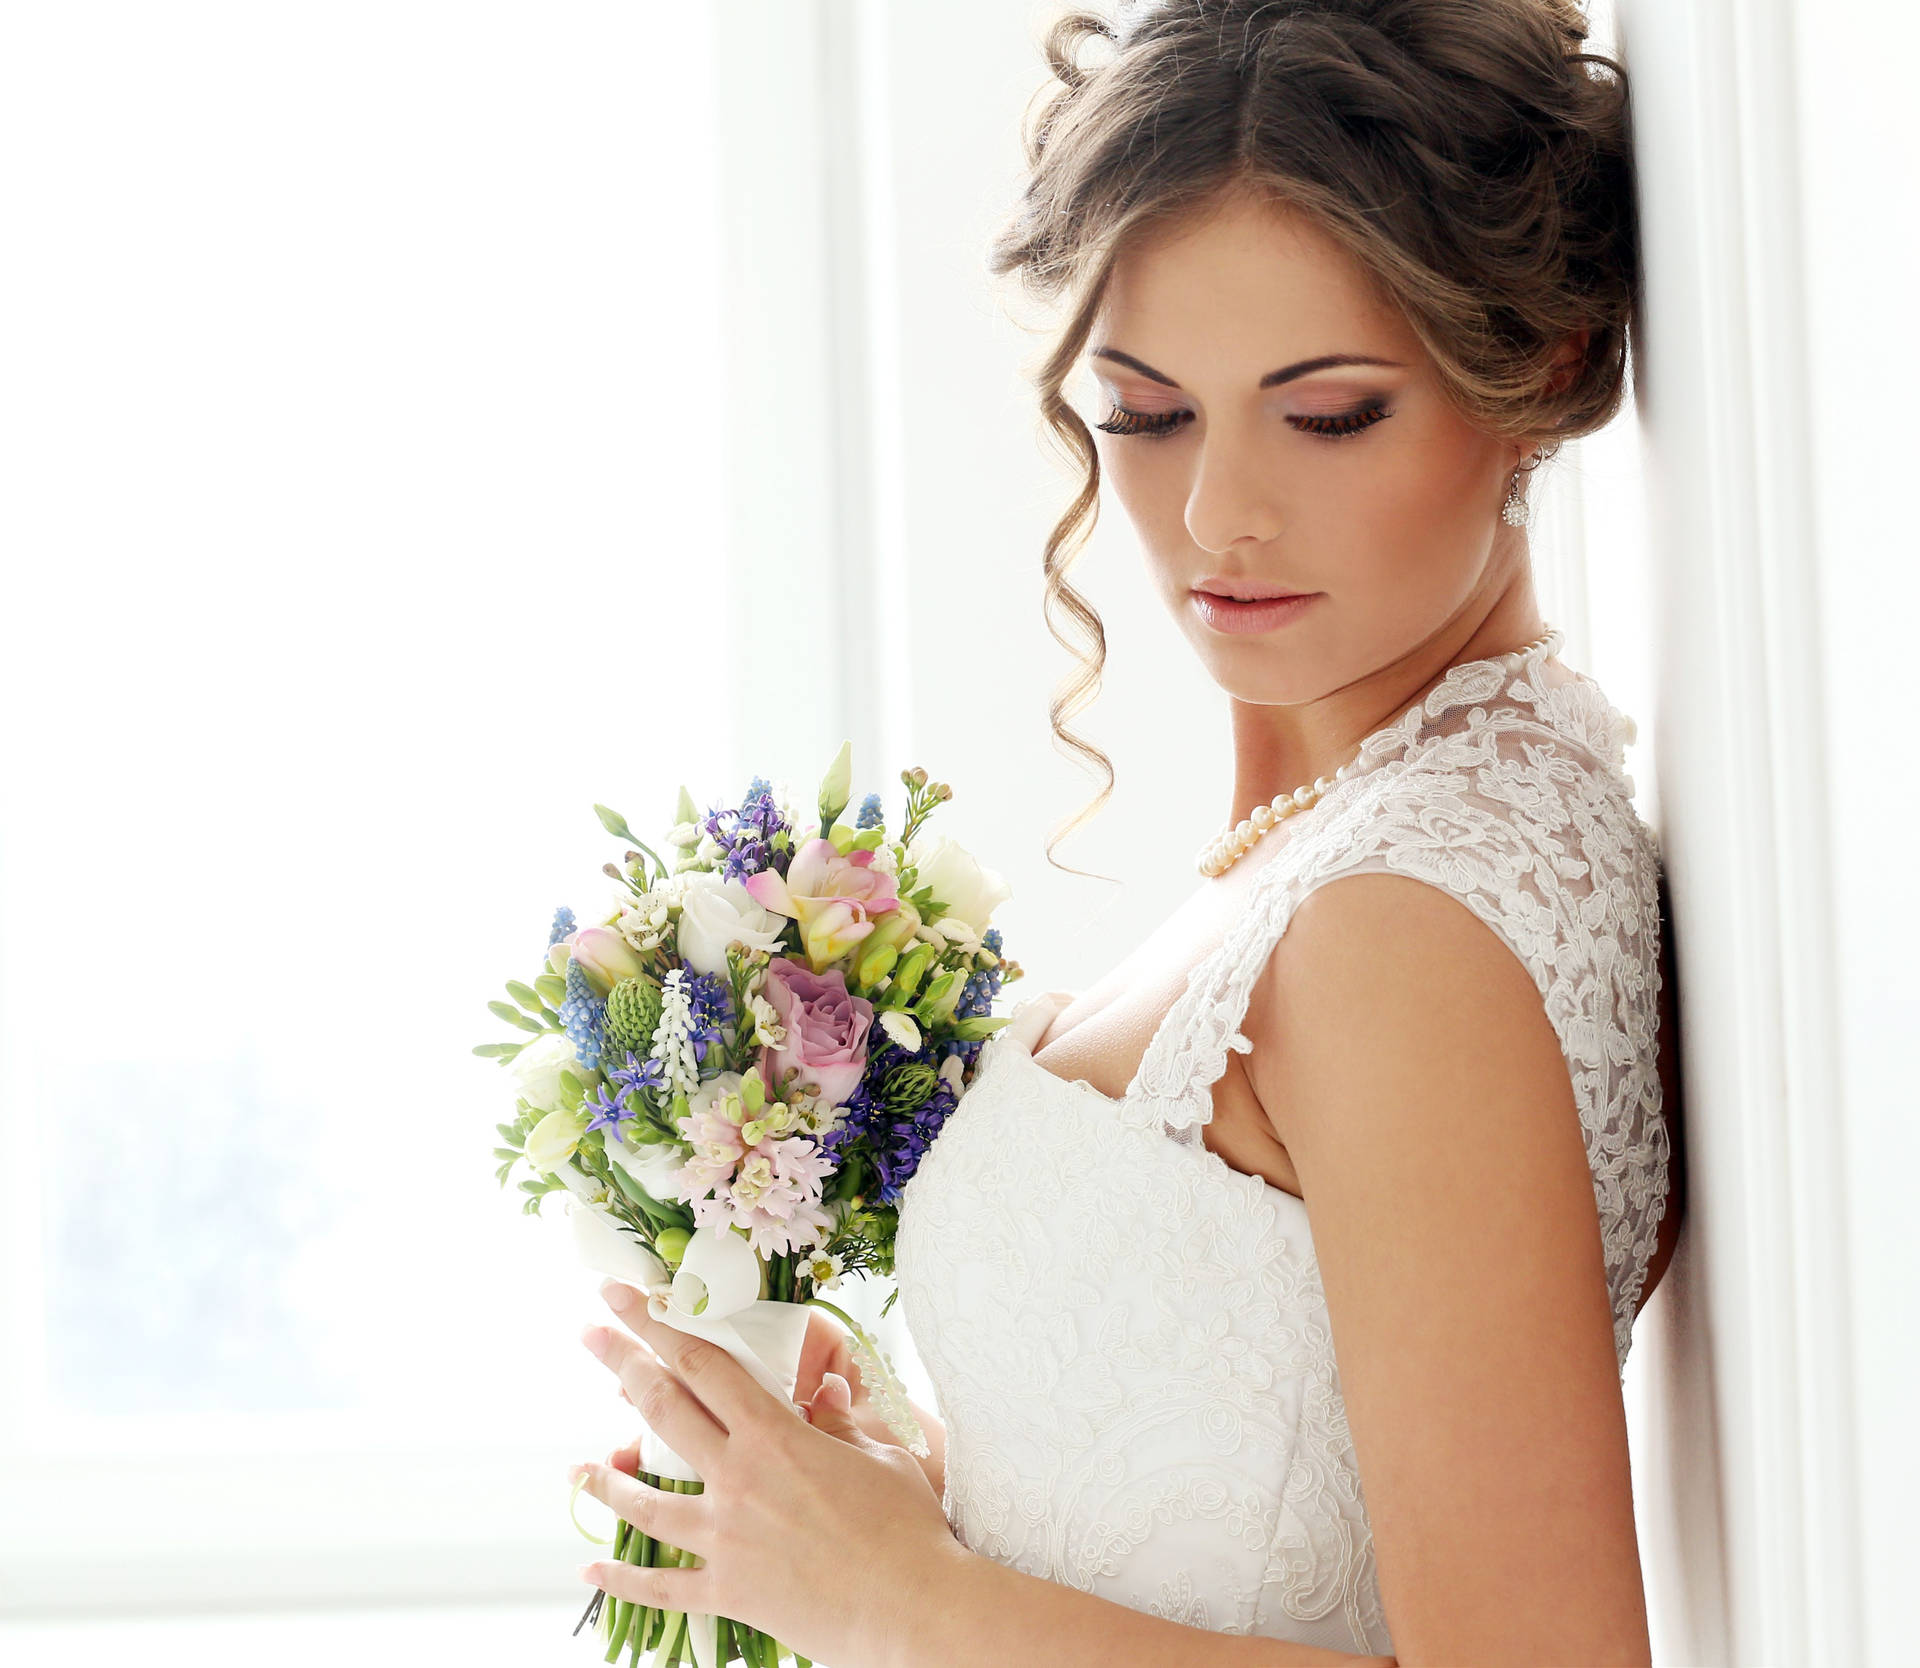 Elegant Bride In A Detailed Wedding Gown